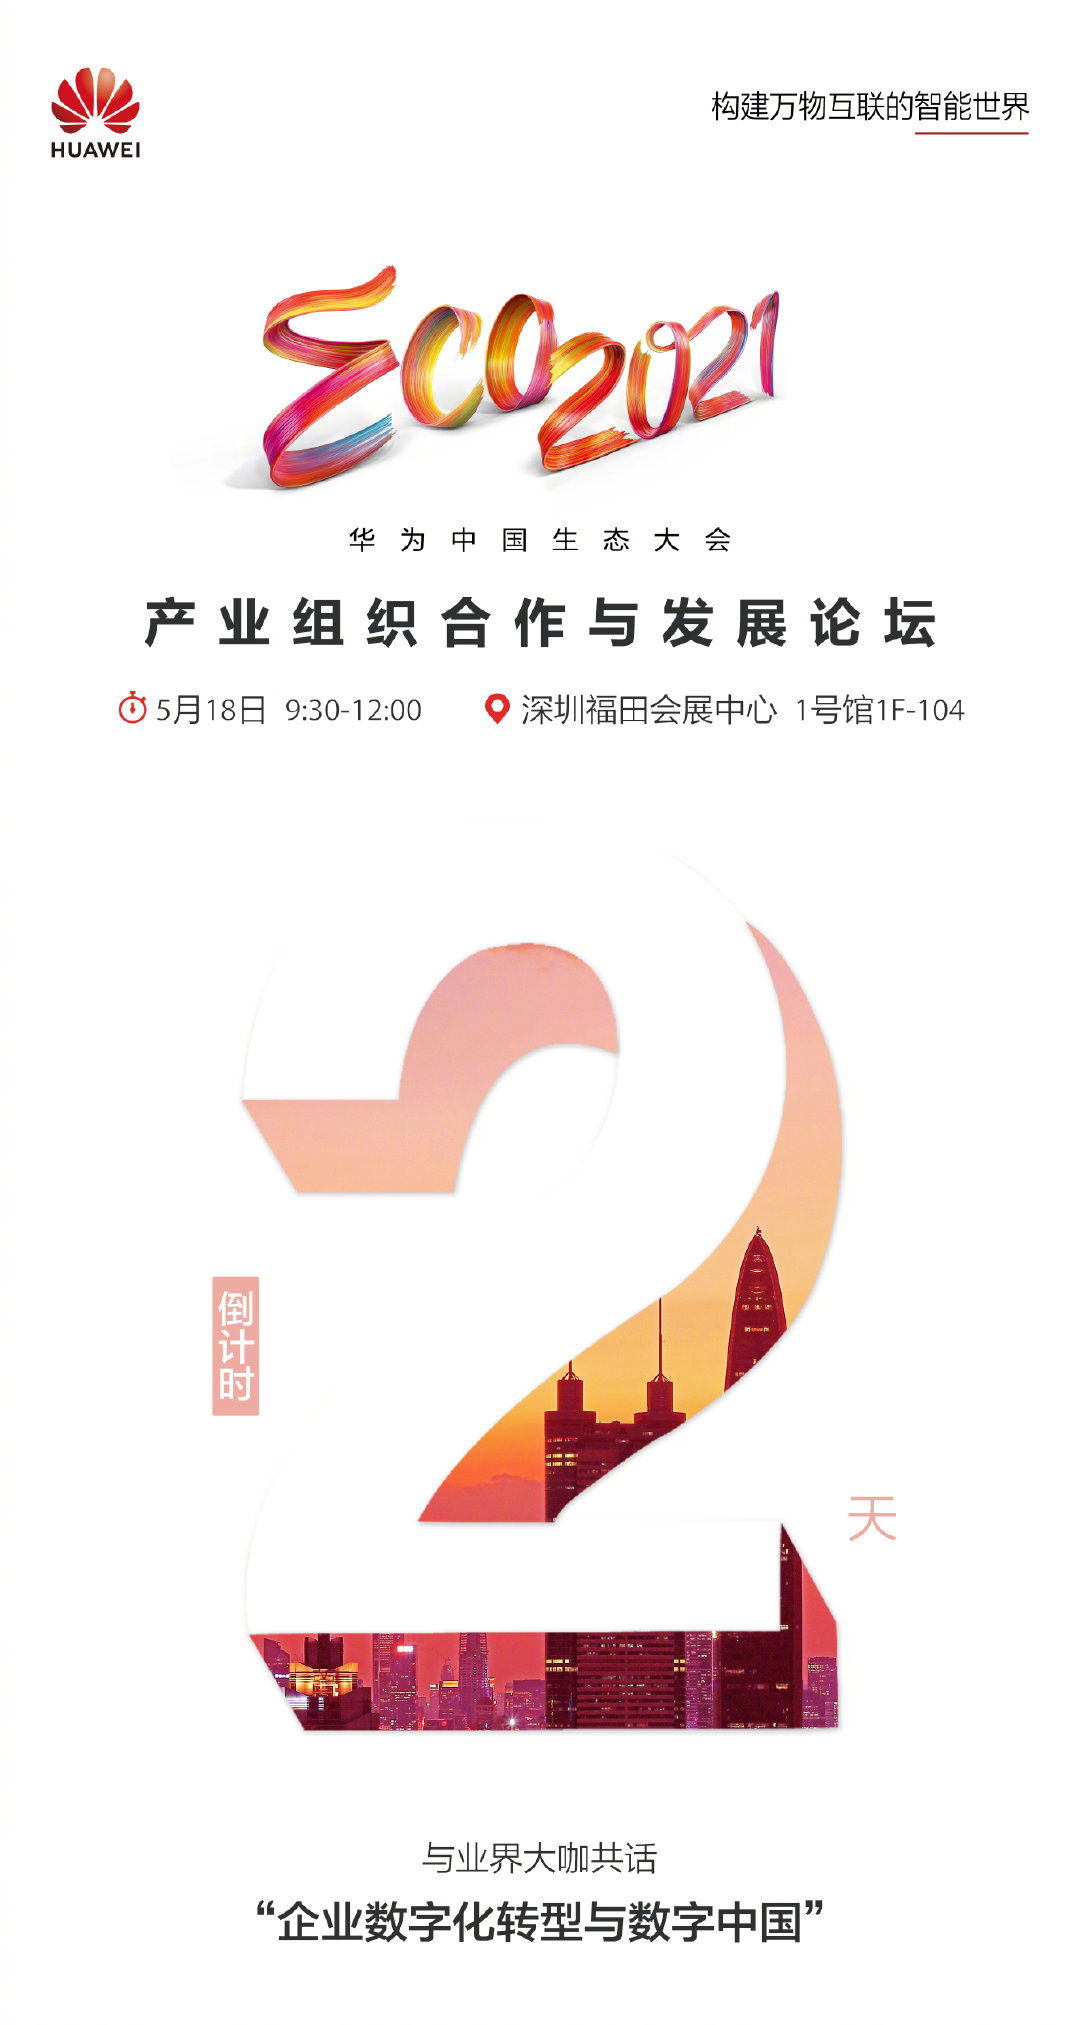 Huawei China ECO 2021